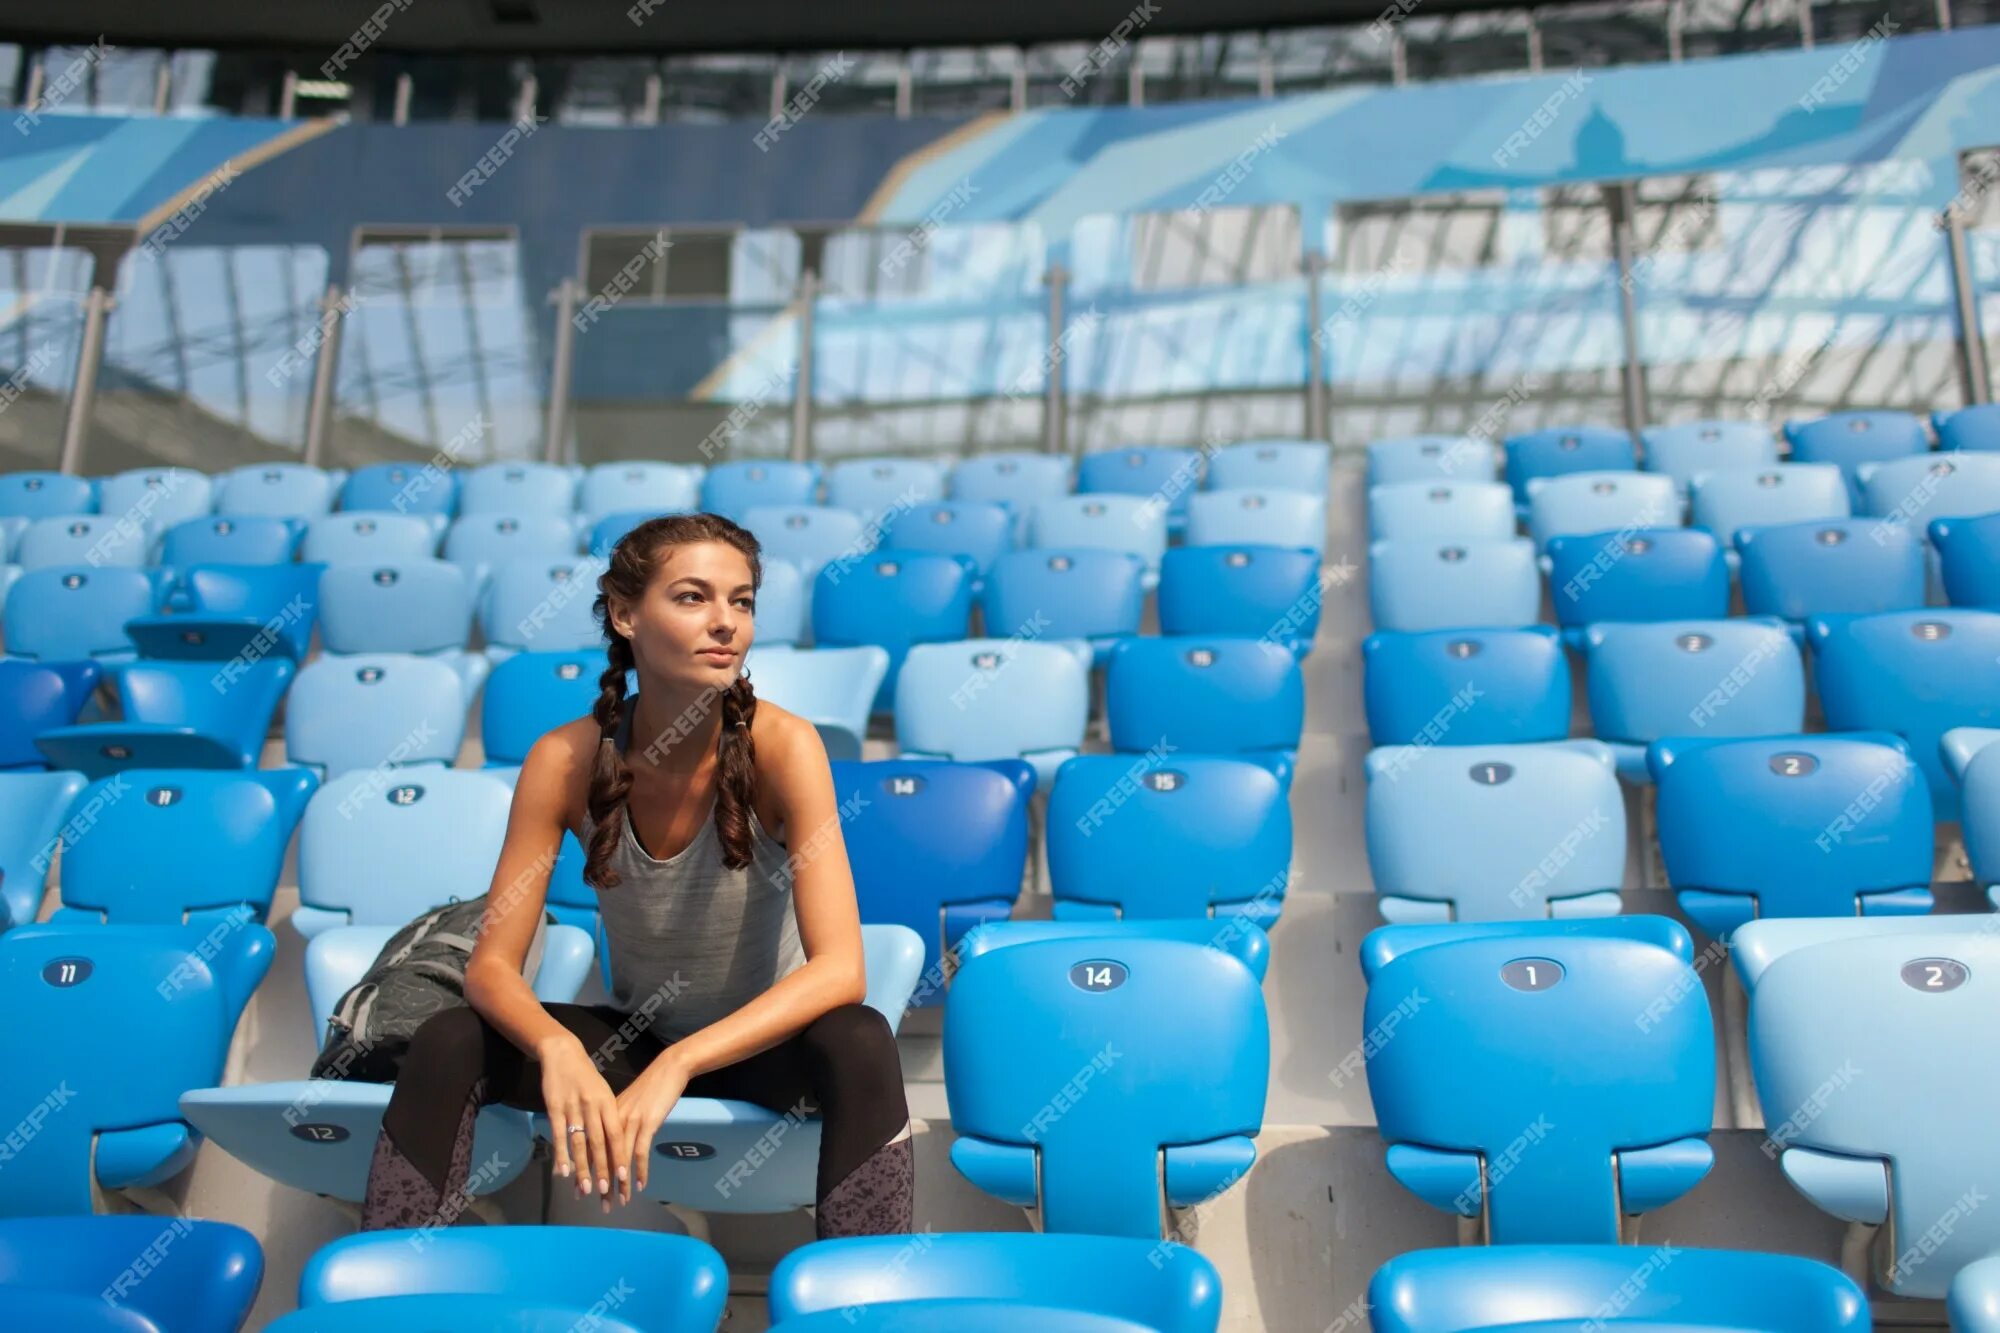 Женщина на стадионе. Женщины на стадионе. Сиденья на стадионе. Сидят на стадионе. Фотосессия девушек на стадионе сидя.